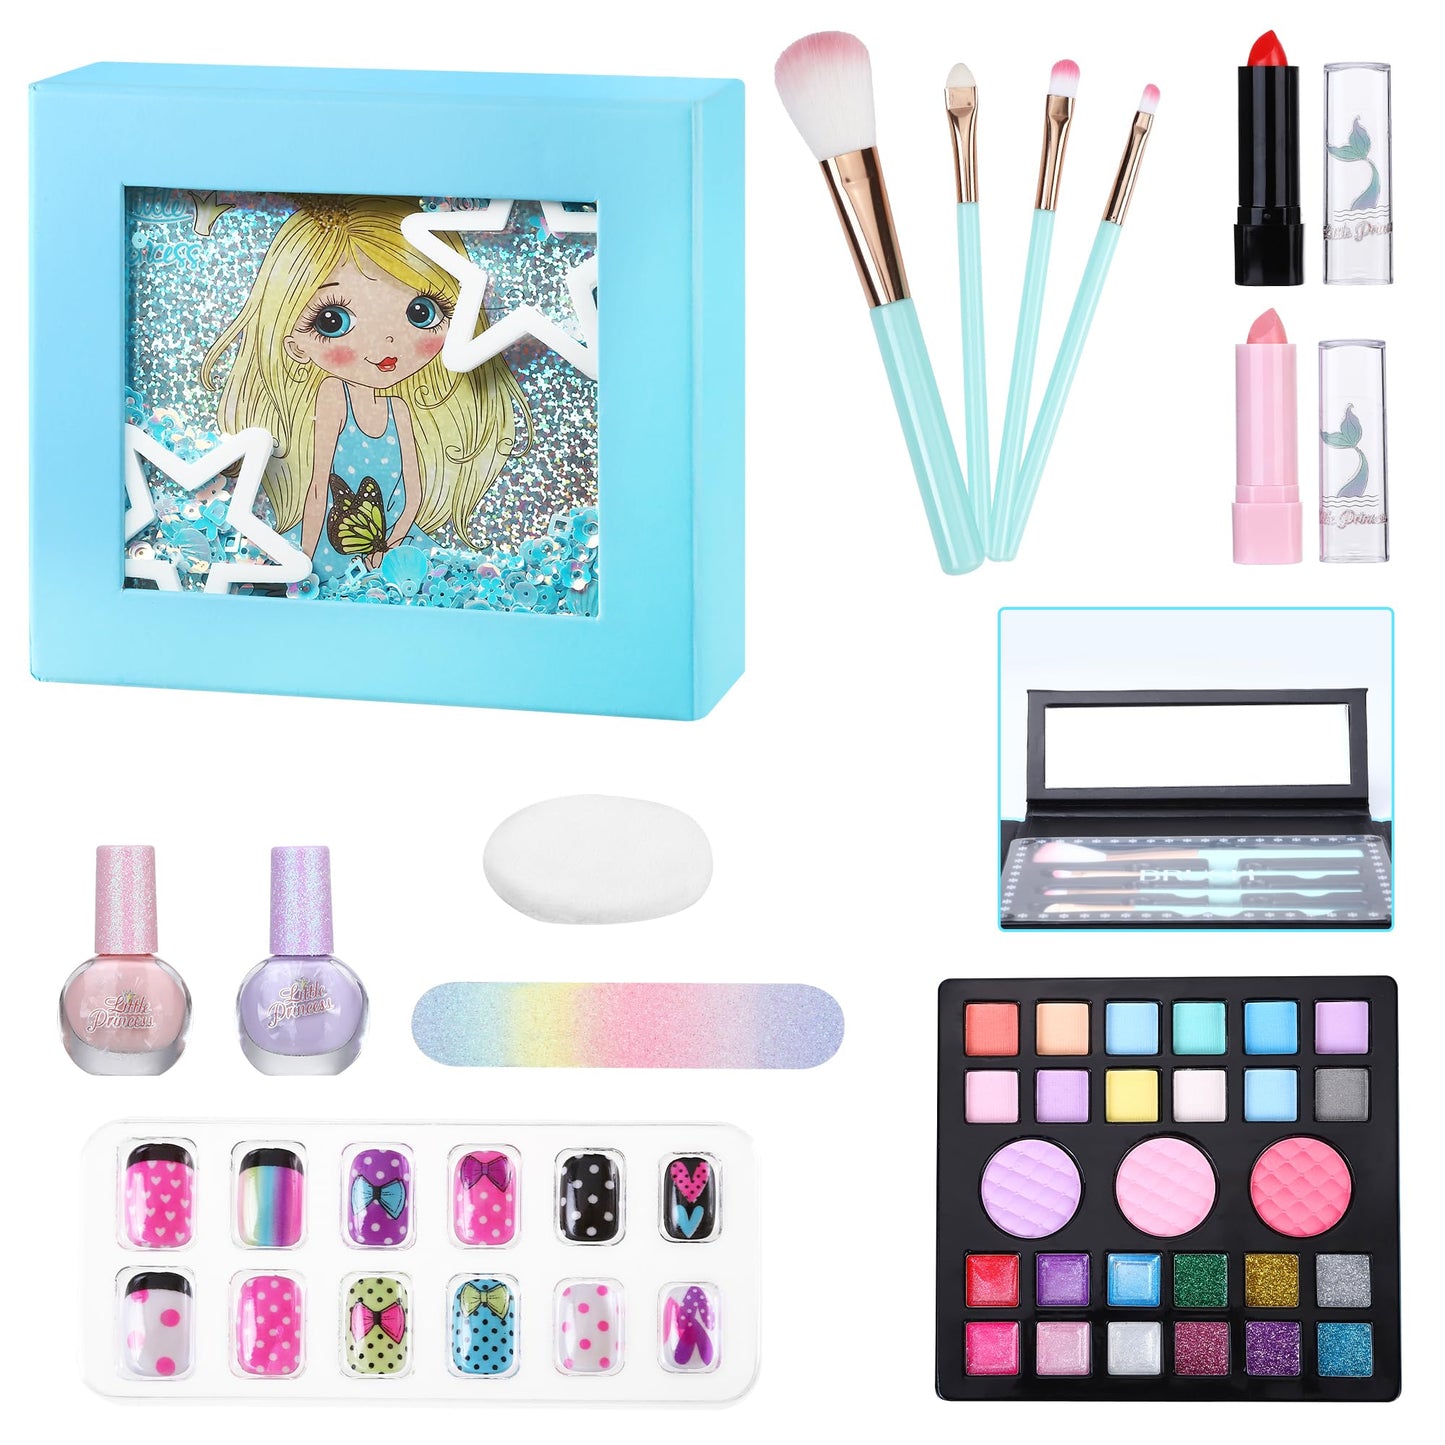 Oxsaytee Kids Makeup Kit for Girl,Children's Cosmetic Set for Princess Dress Up Makeup Set Toys, Safe & Non-Toxic Girl Makeup Set, Pretend Play Makeup Set, Christmas & Birthday Gift (Blue)